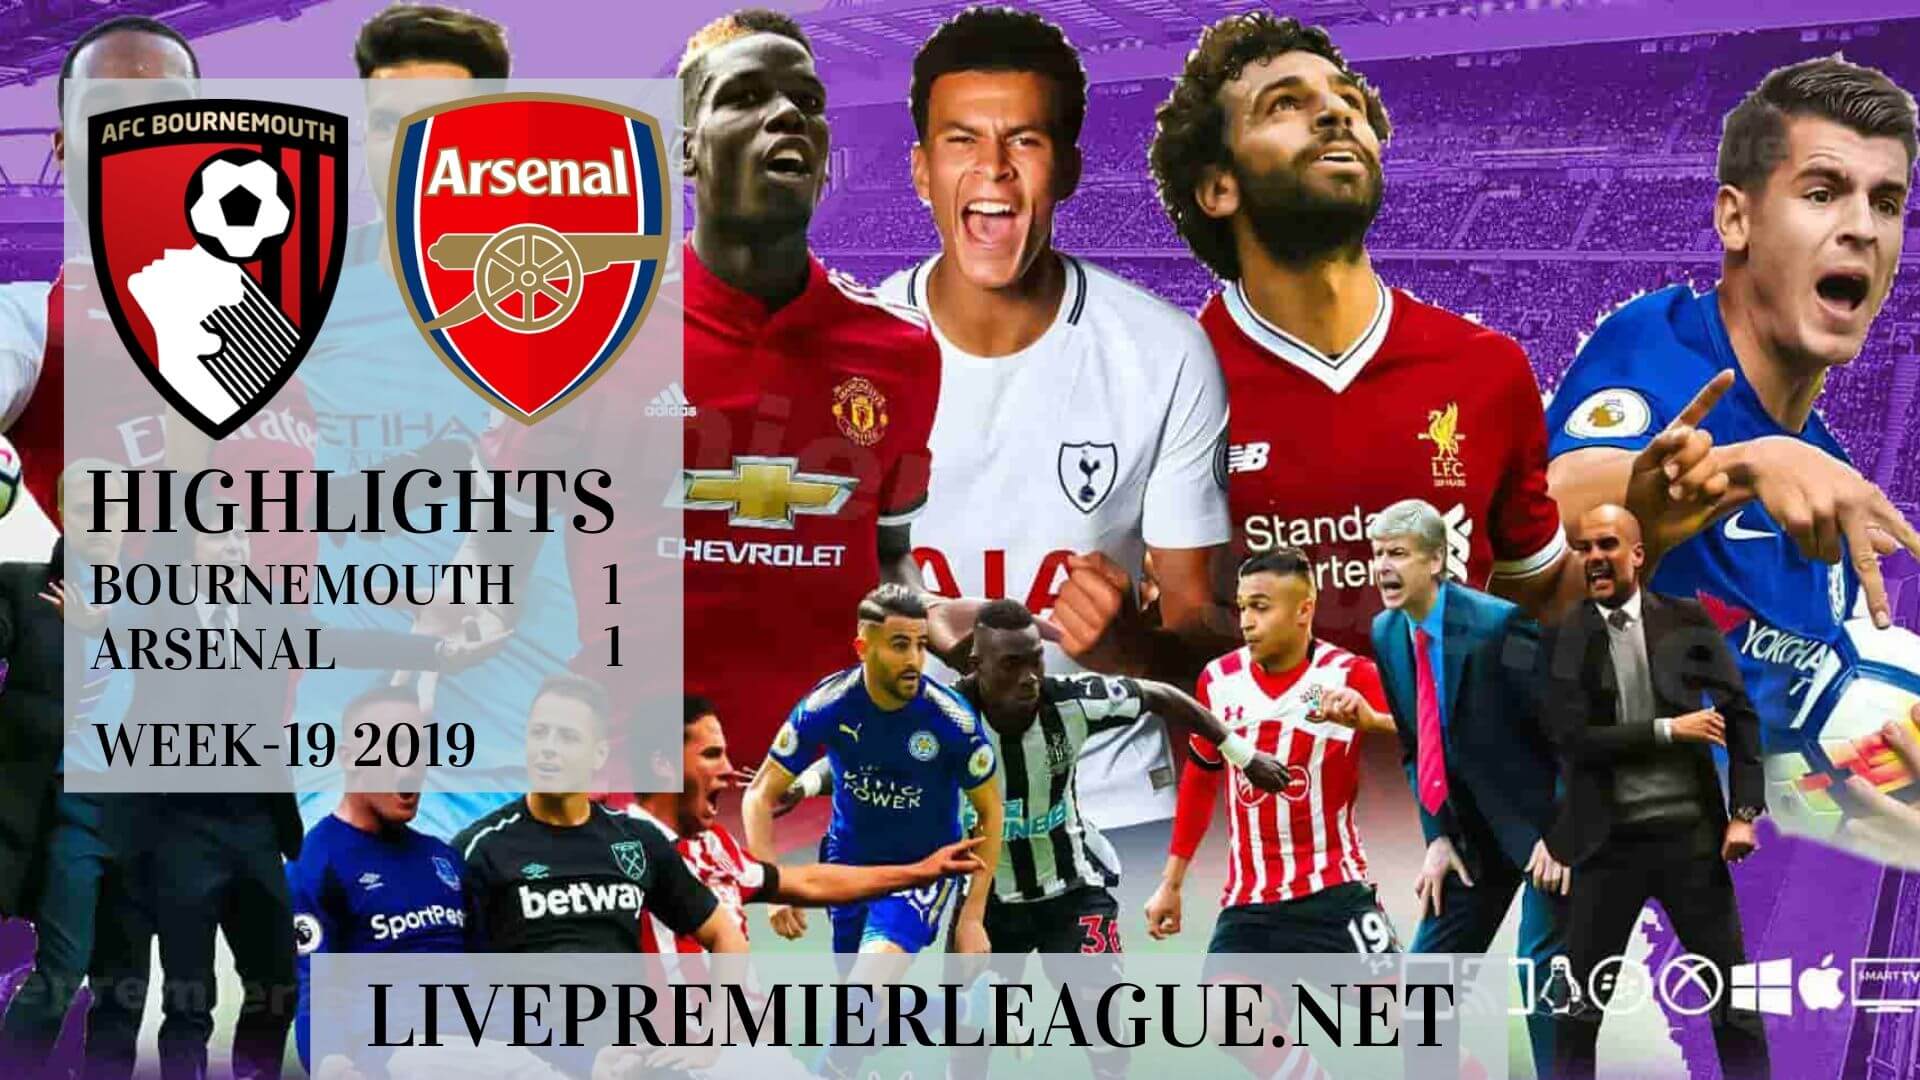 AFC Bournemouth Vs Arsenal Highlights 2019 Week 19